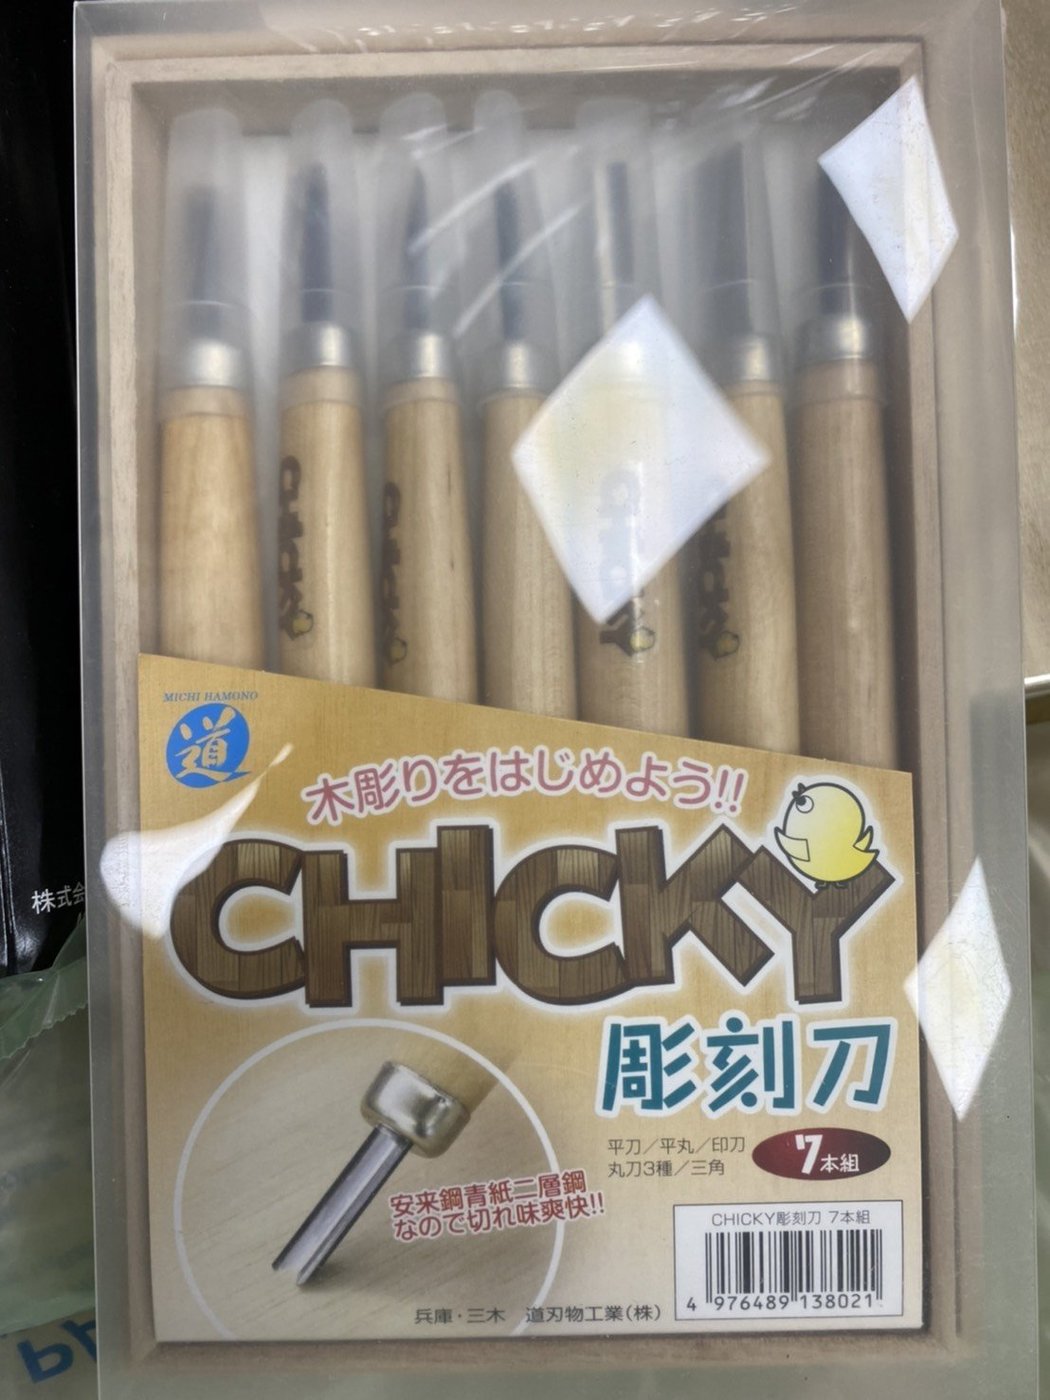 [CK五金小舖] 日本道刃物CHICKY 雕刻刀10支組7支組桐木盒包裝